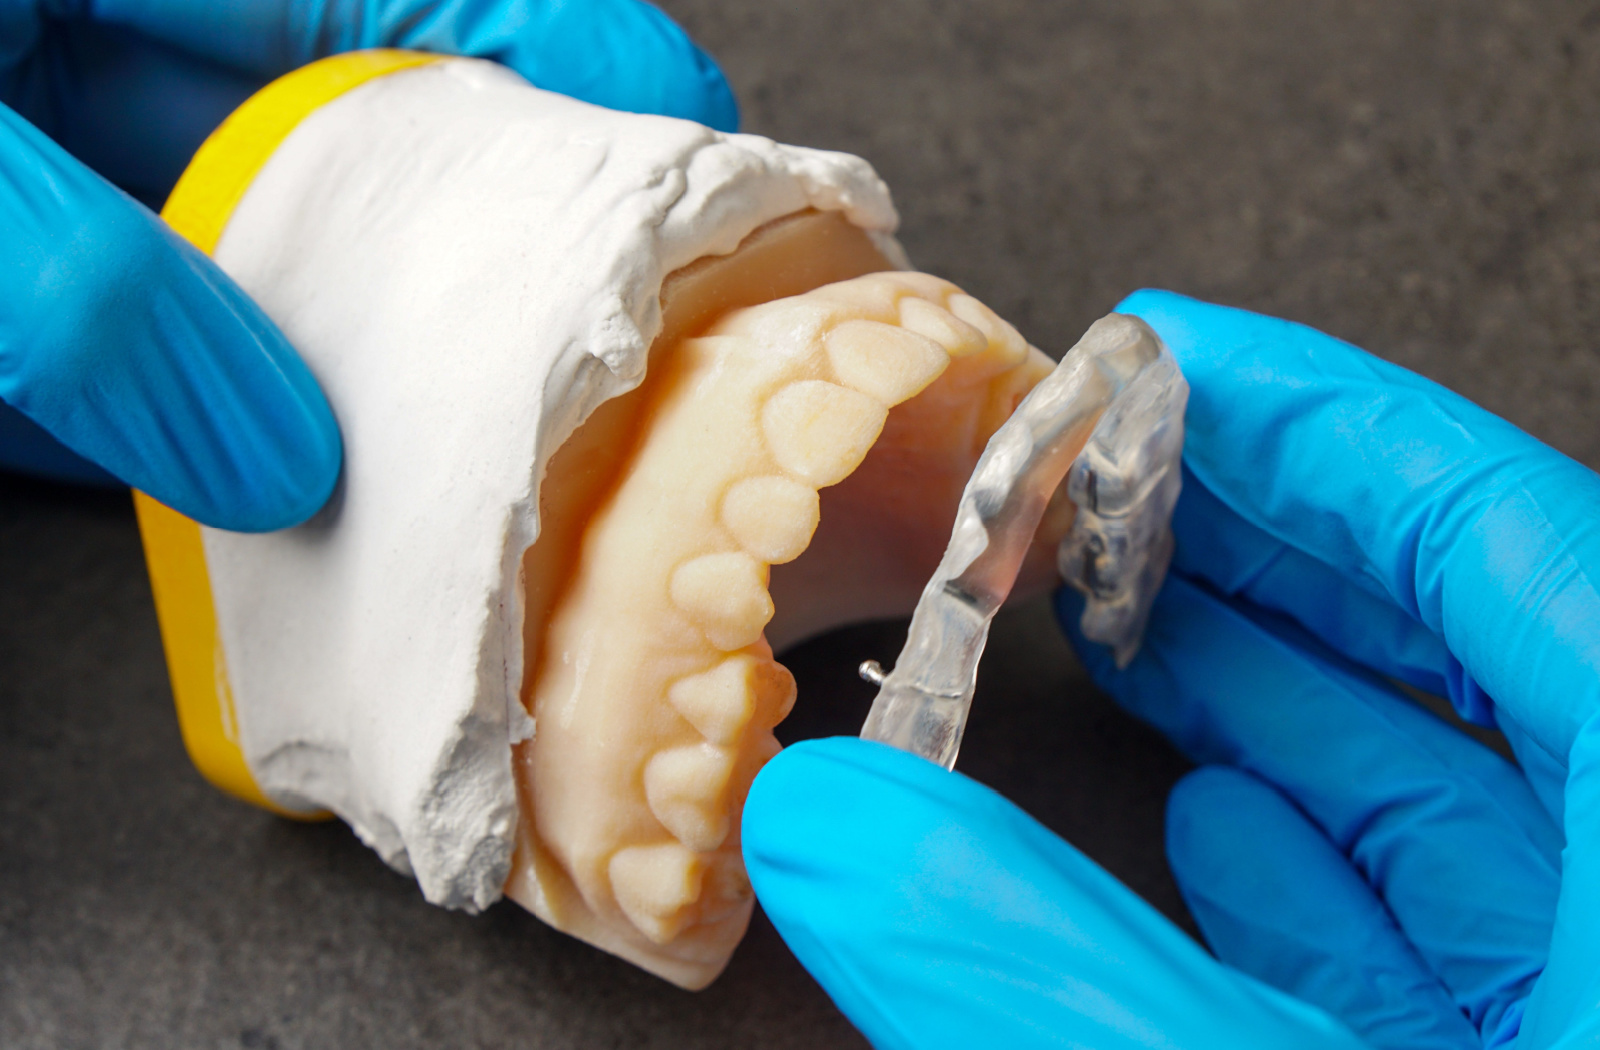 Dentist adjusting a mouth guard on a dental mould.